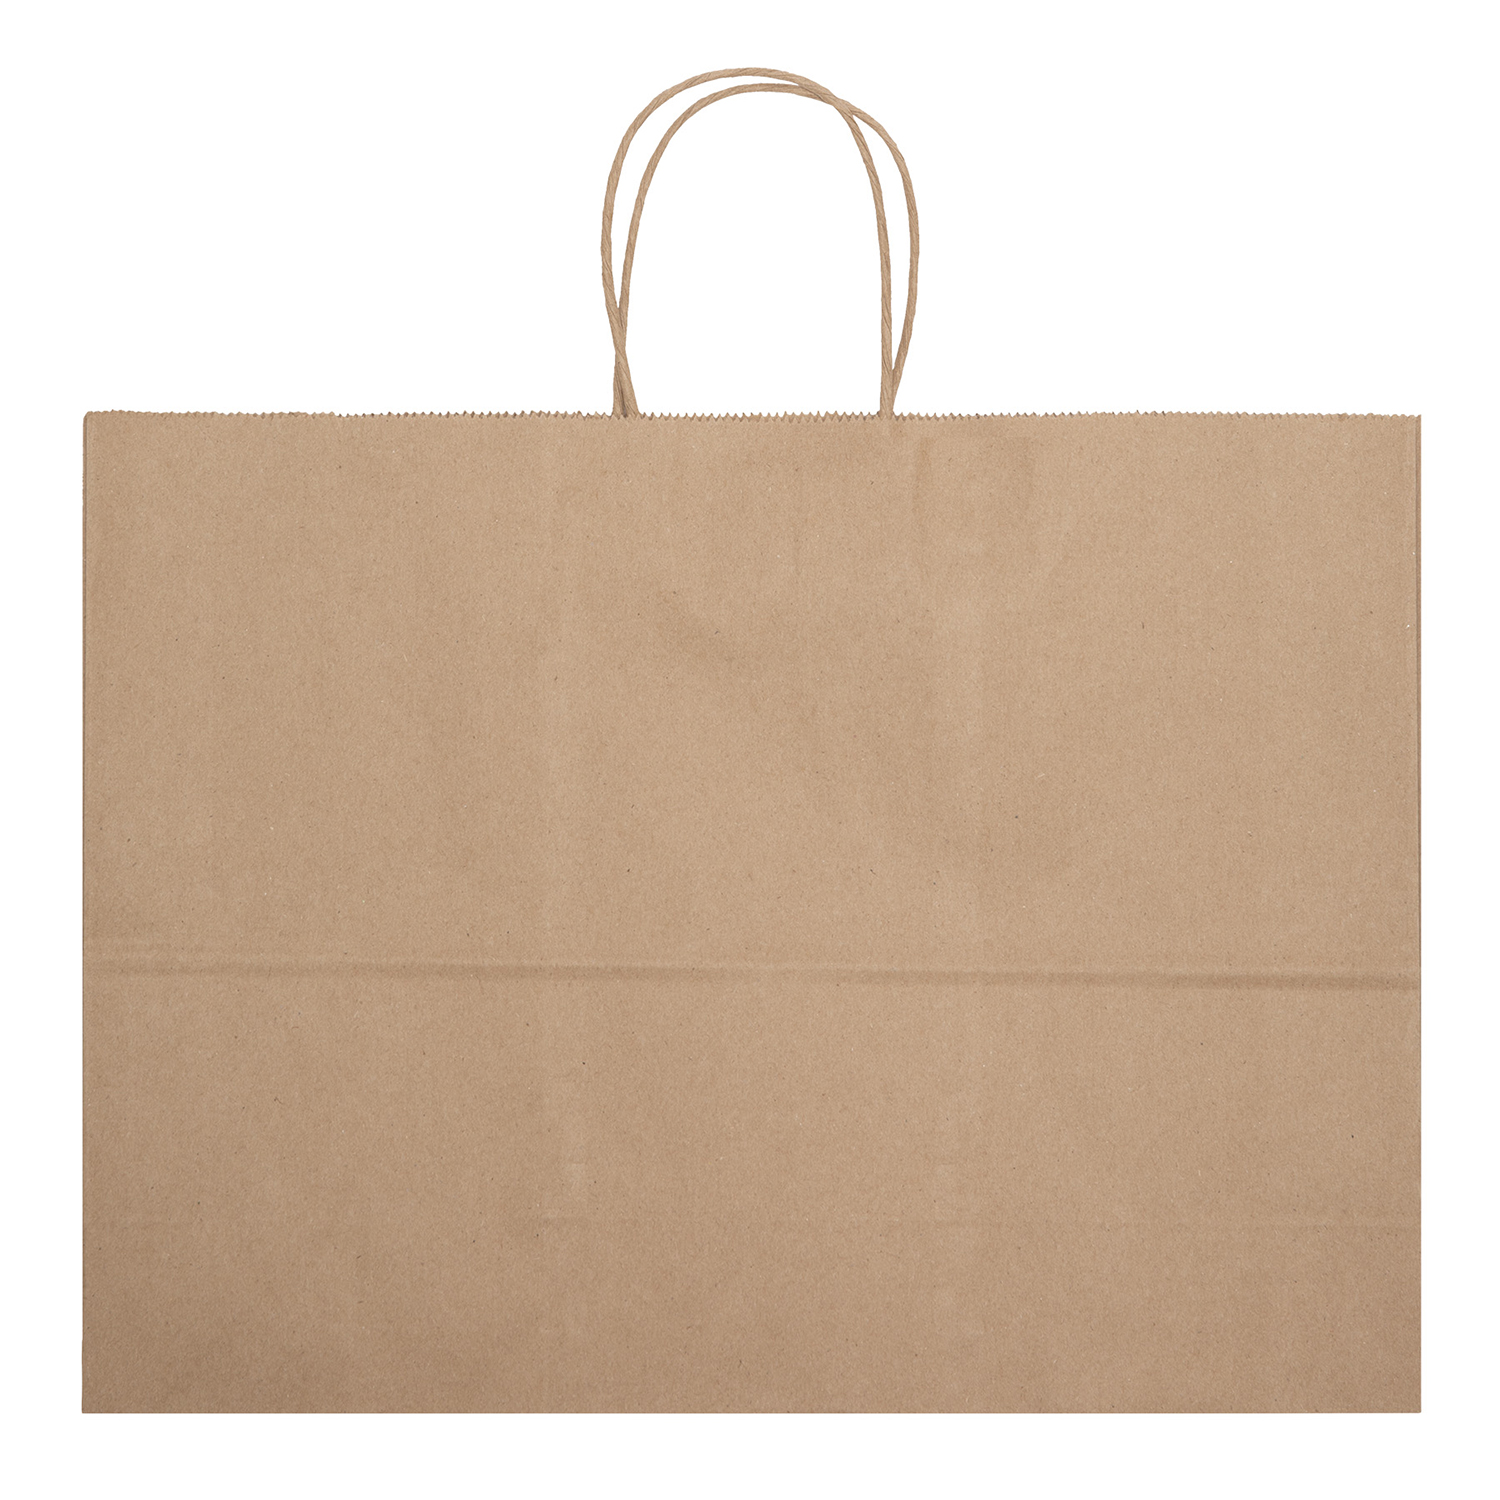 Bag Makers CVECO1612 - Custom Printed Eco-Friendly Promotional Paper Bag